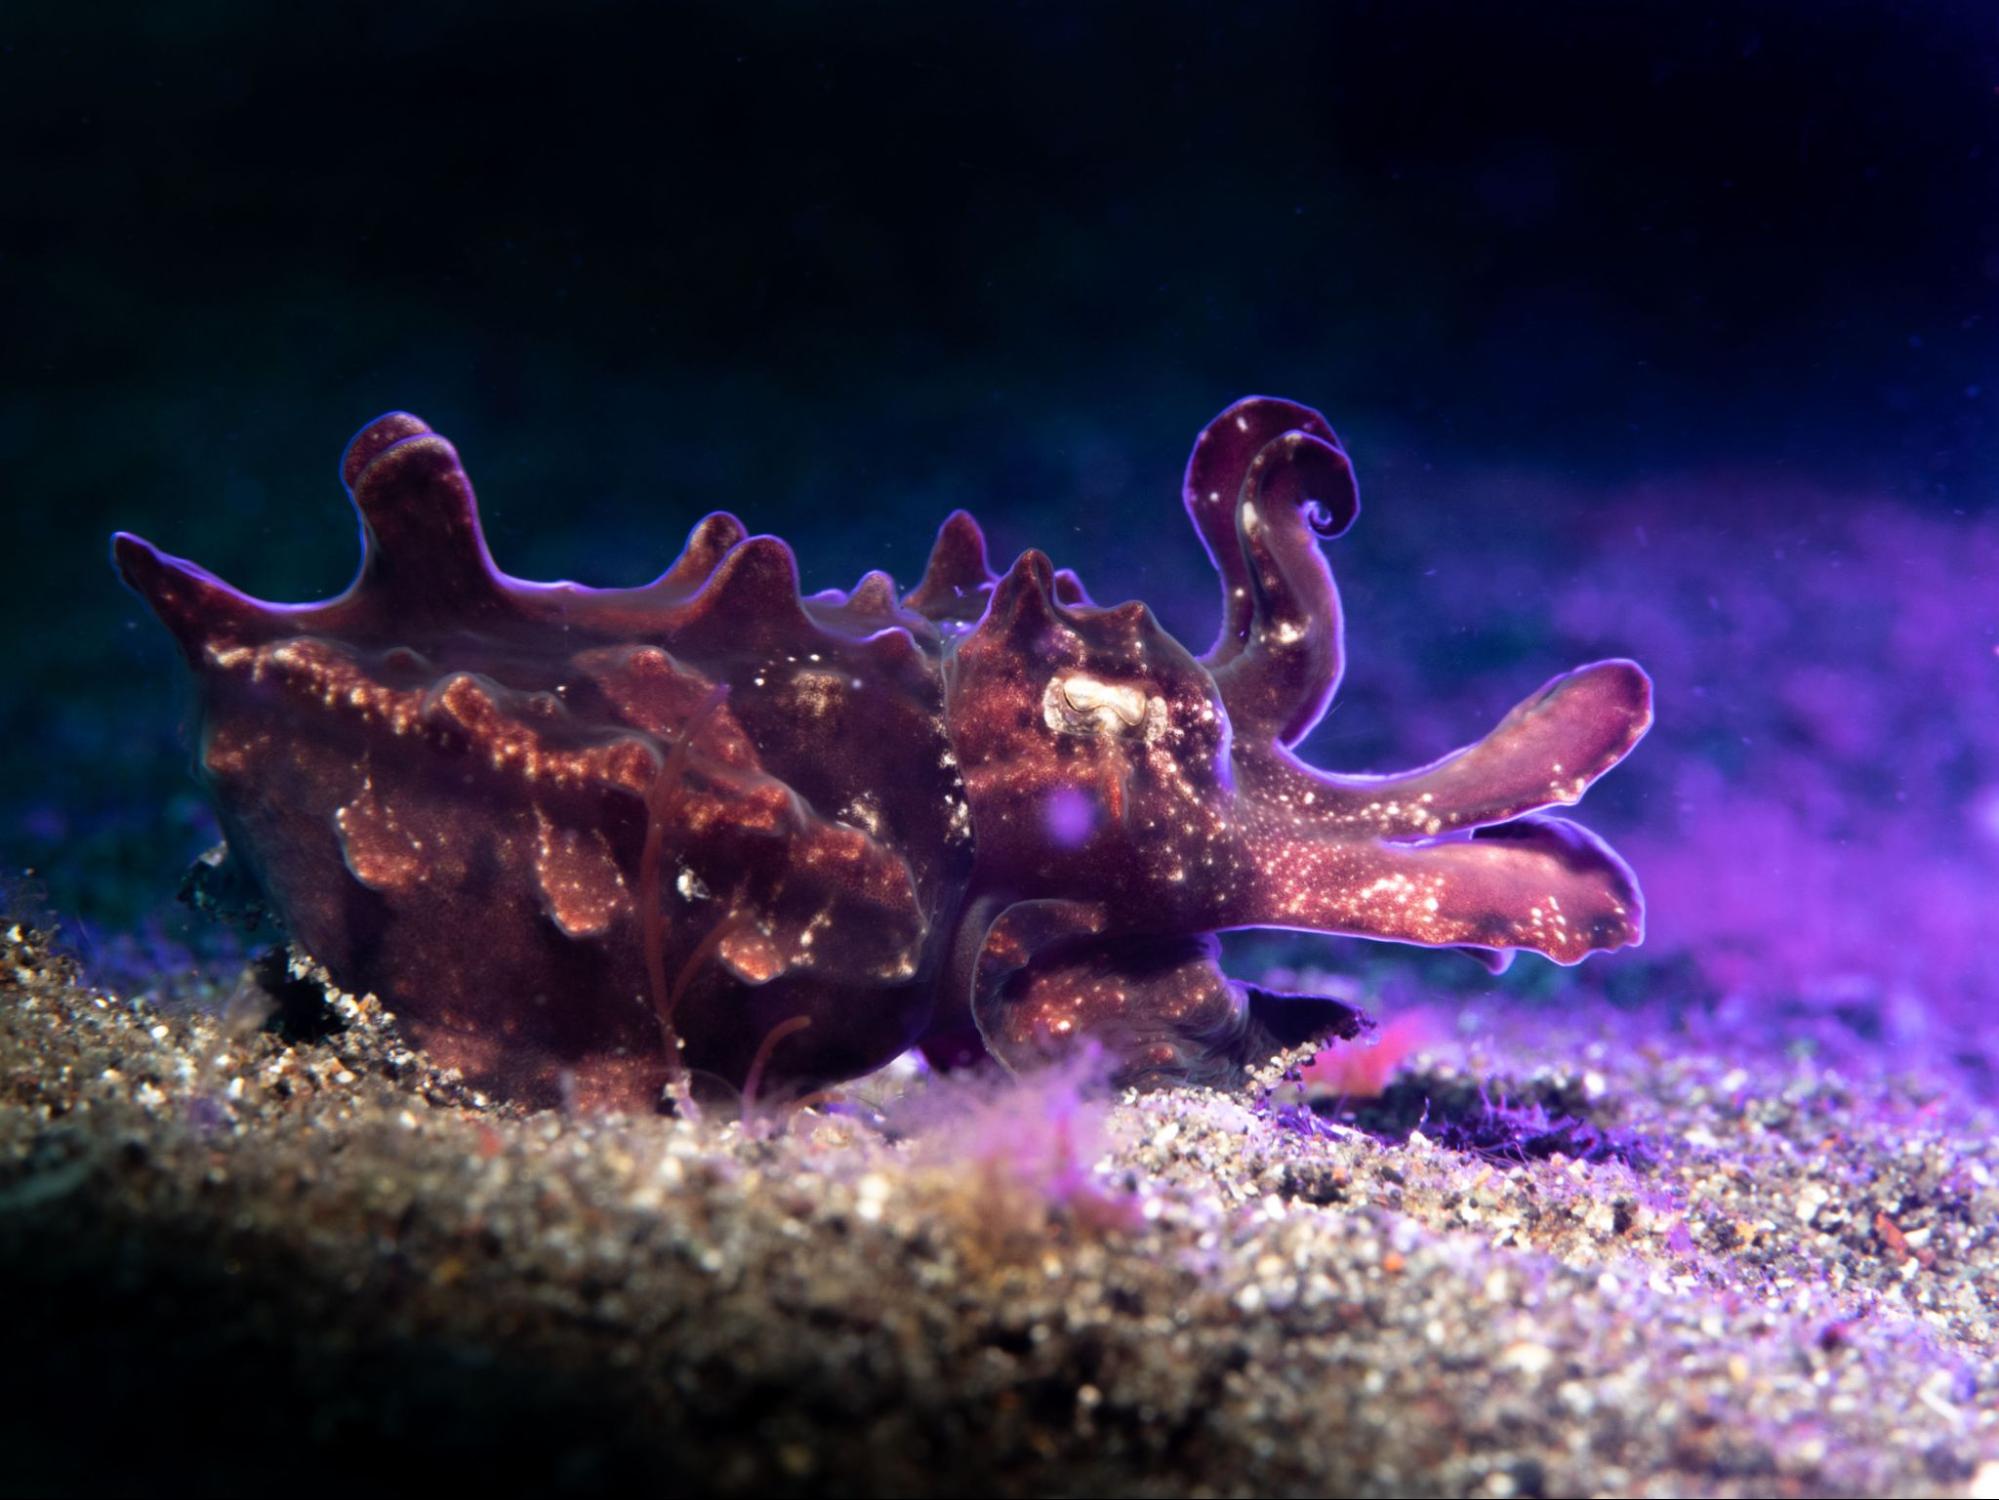 smallest species of cuttlefish